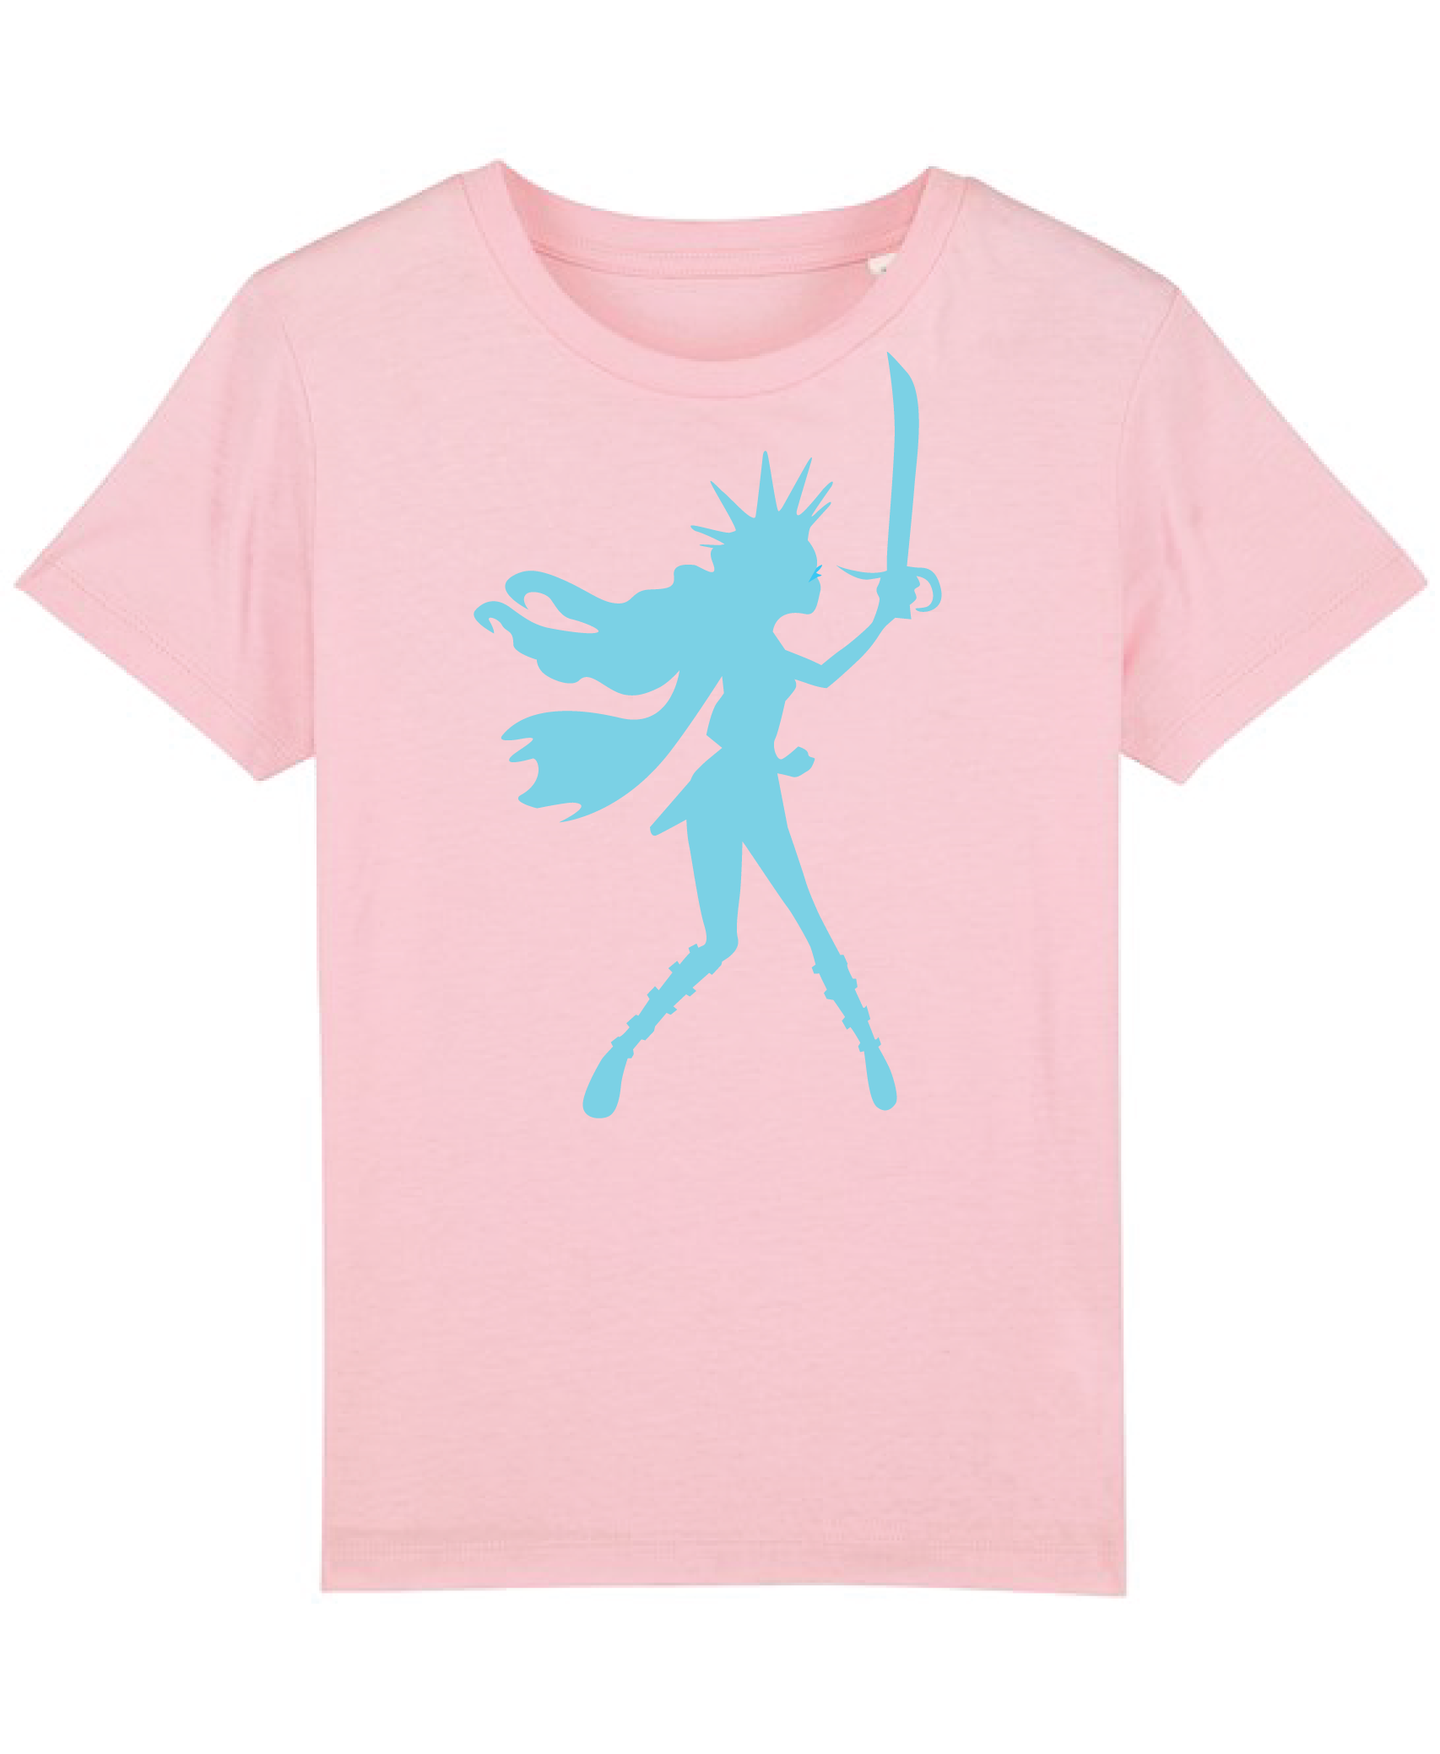 Girls New Pink Organic tee shirt with Blue Pirate Queen flock print.